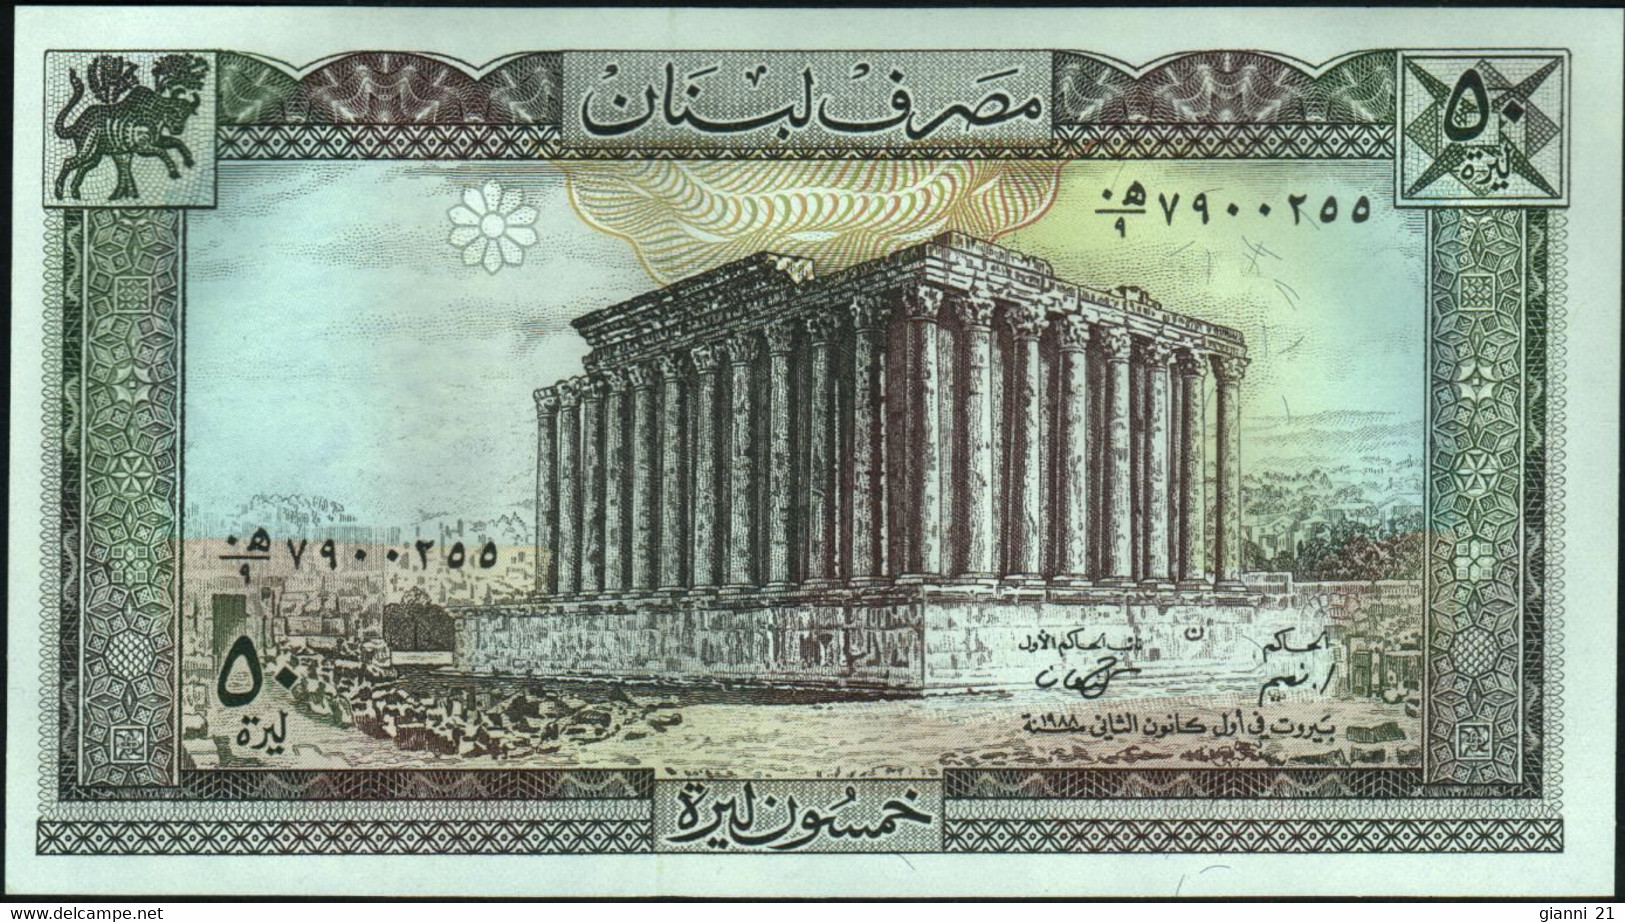 LEBANON 50 Livres Banknote World Paper Money UNC Currency Pick p65d 1988